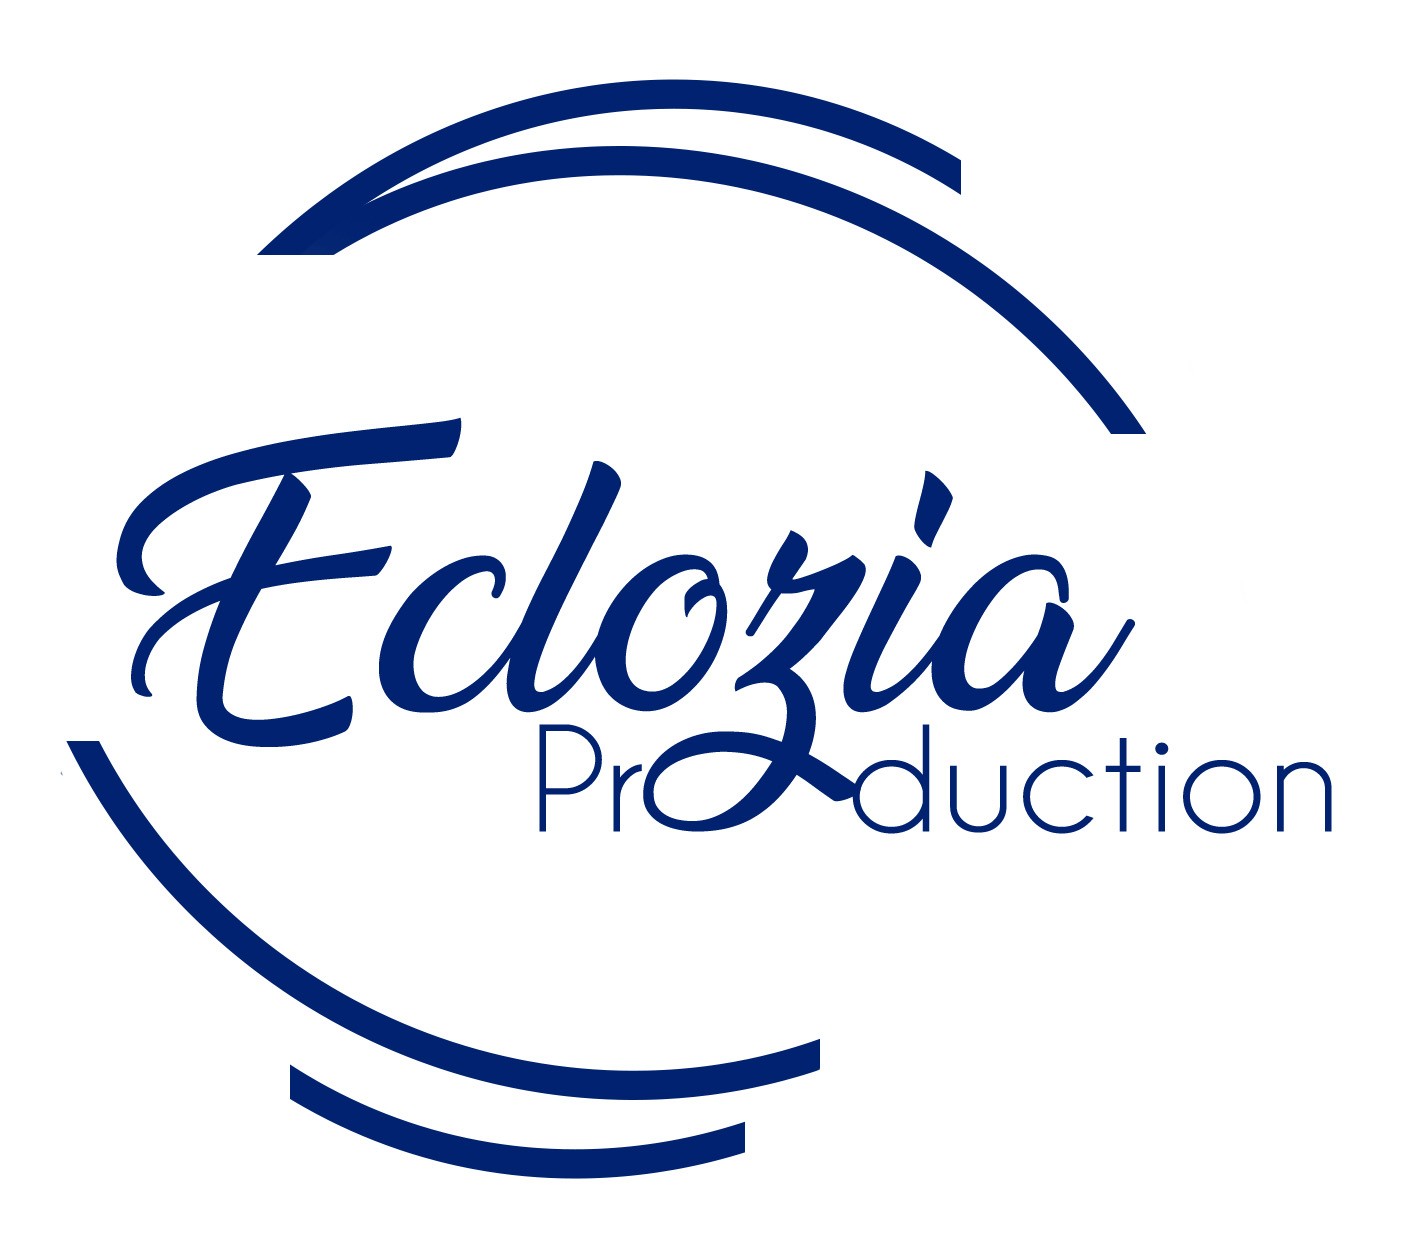 Eclozia production